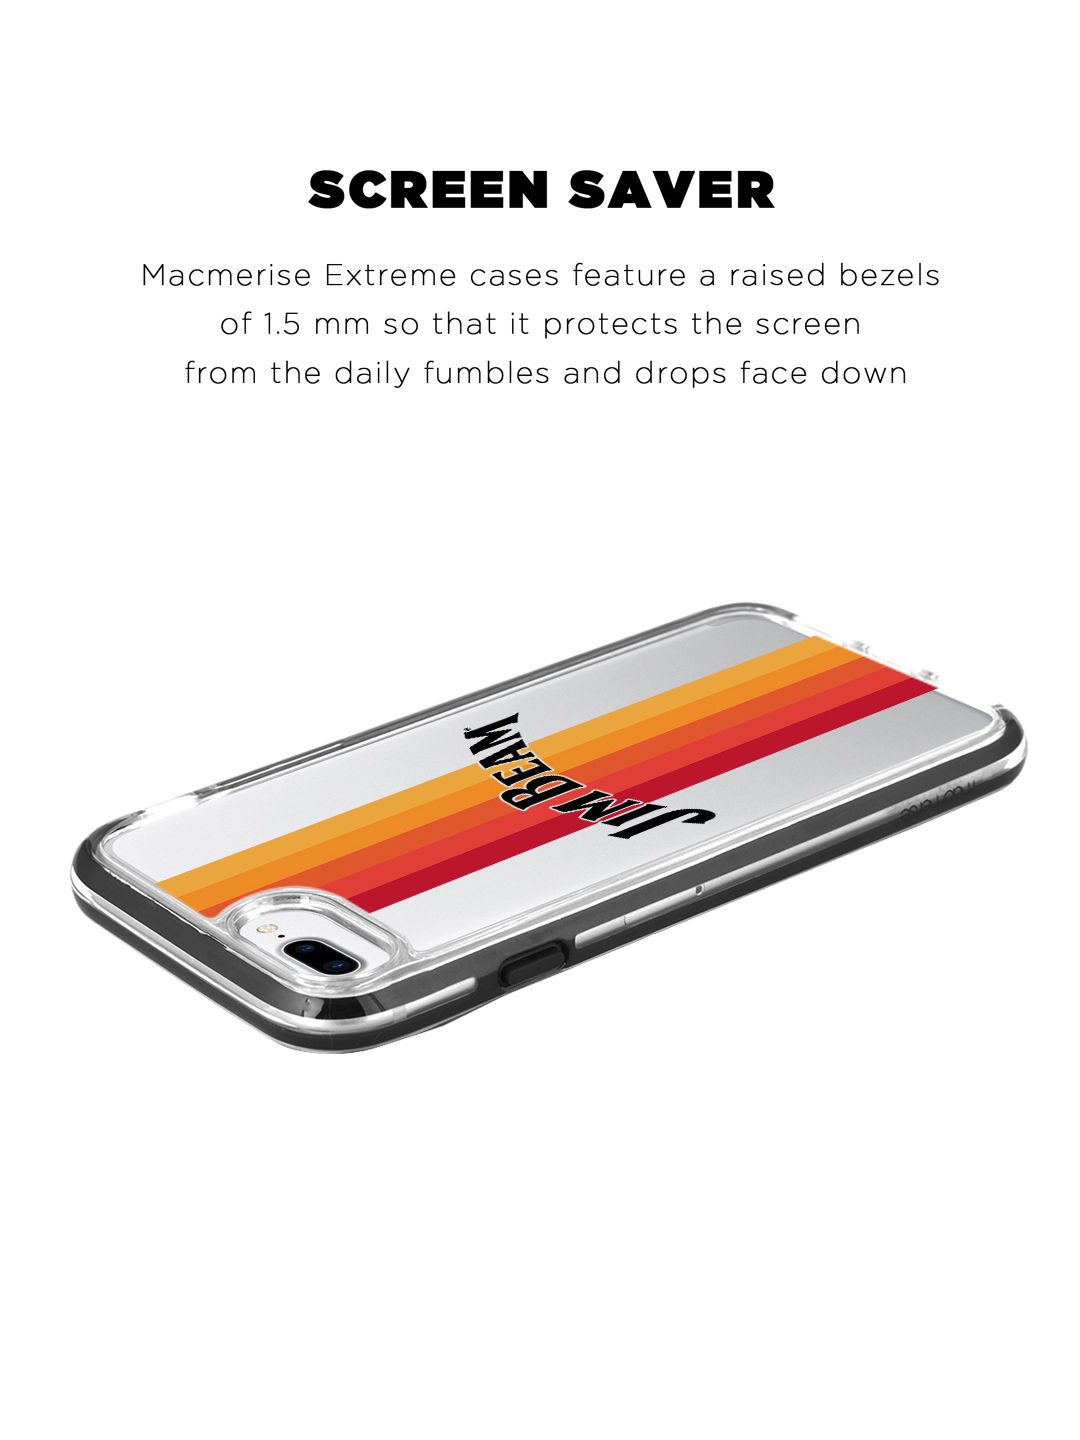 Jim Beam Sun rays Stripes - Shield Case for iPhone 7 Plus